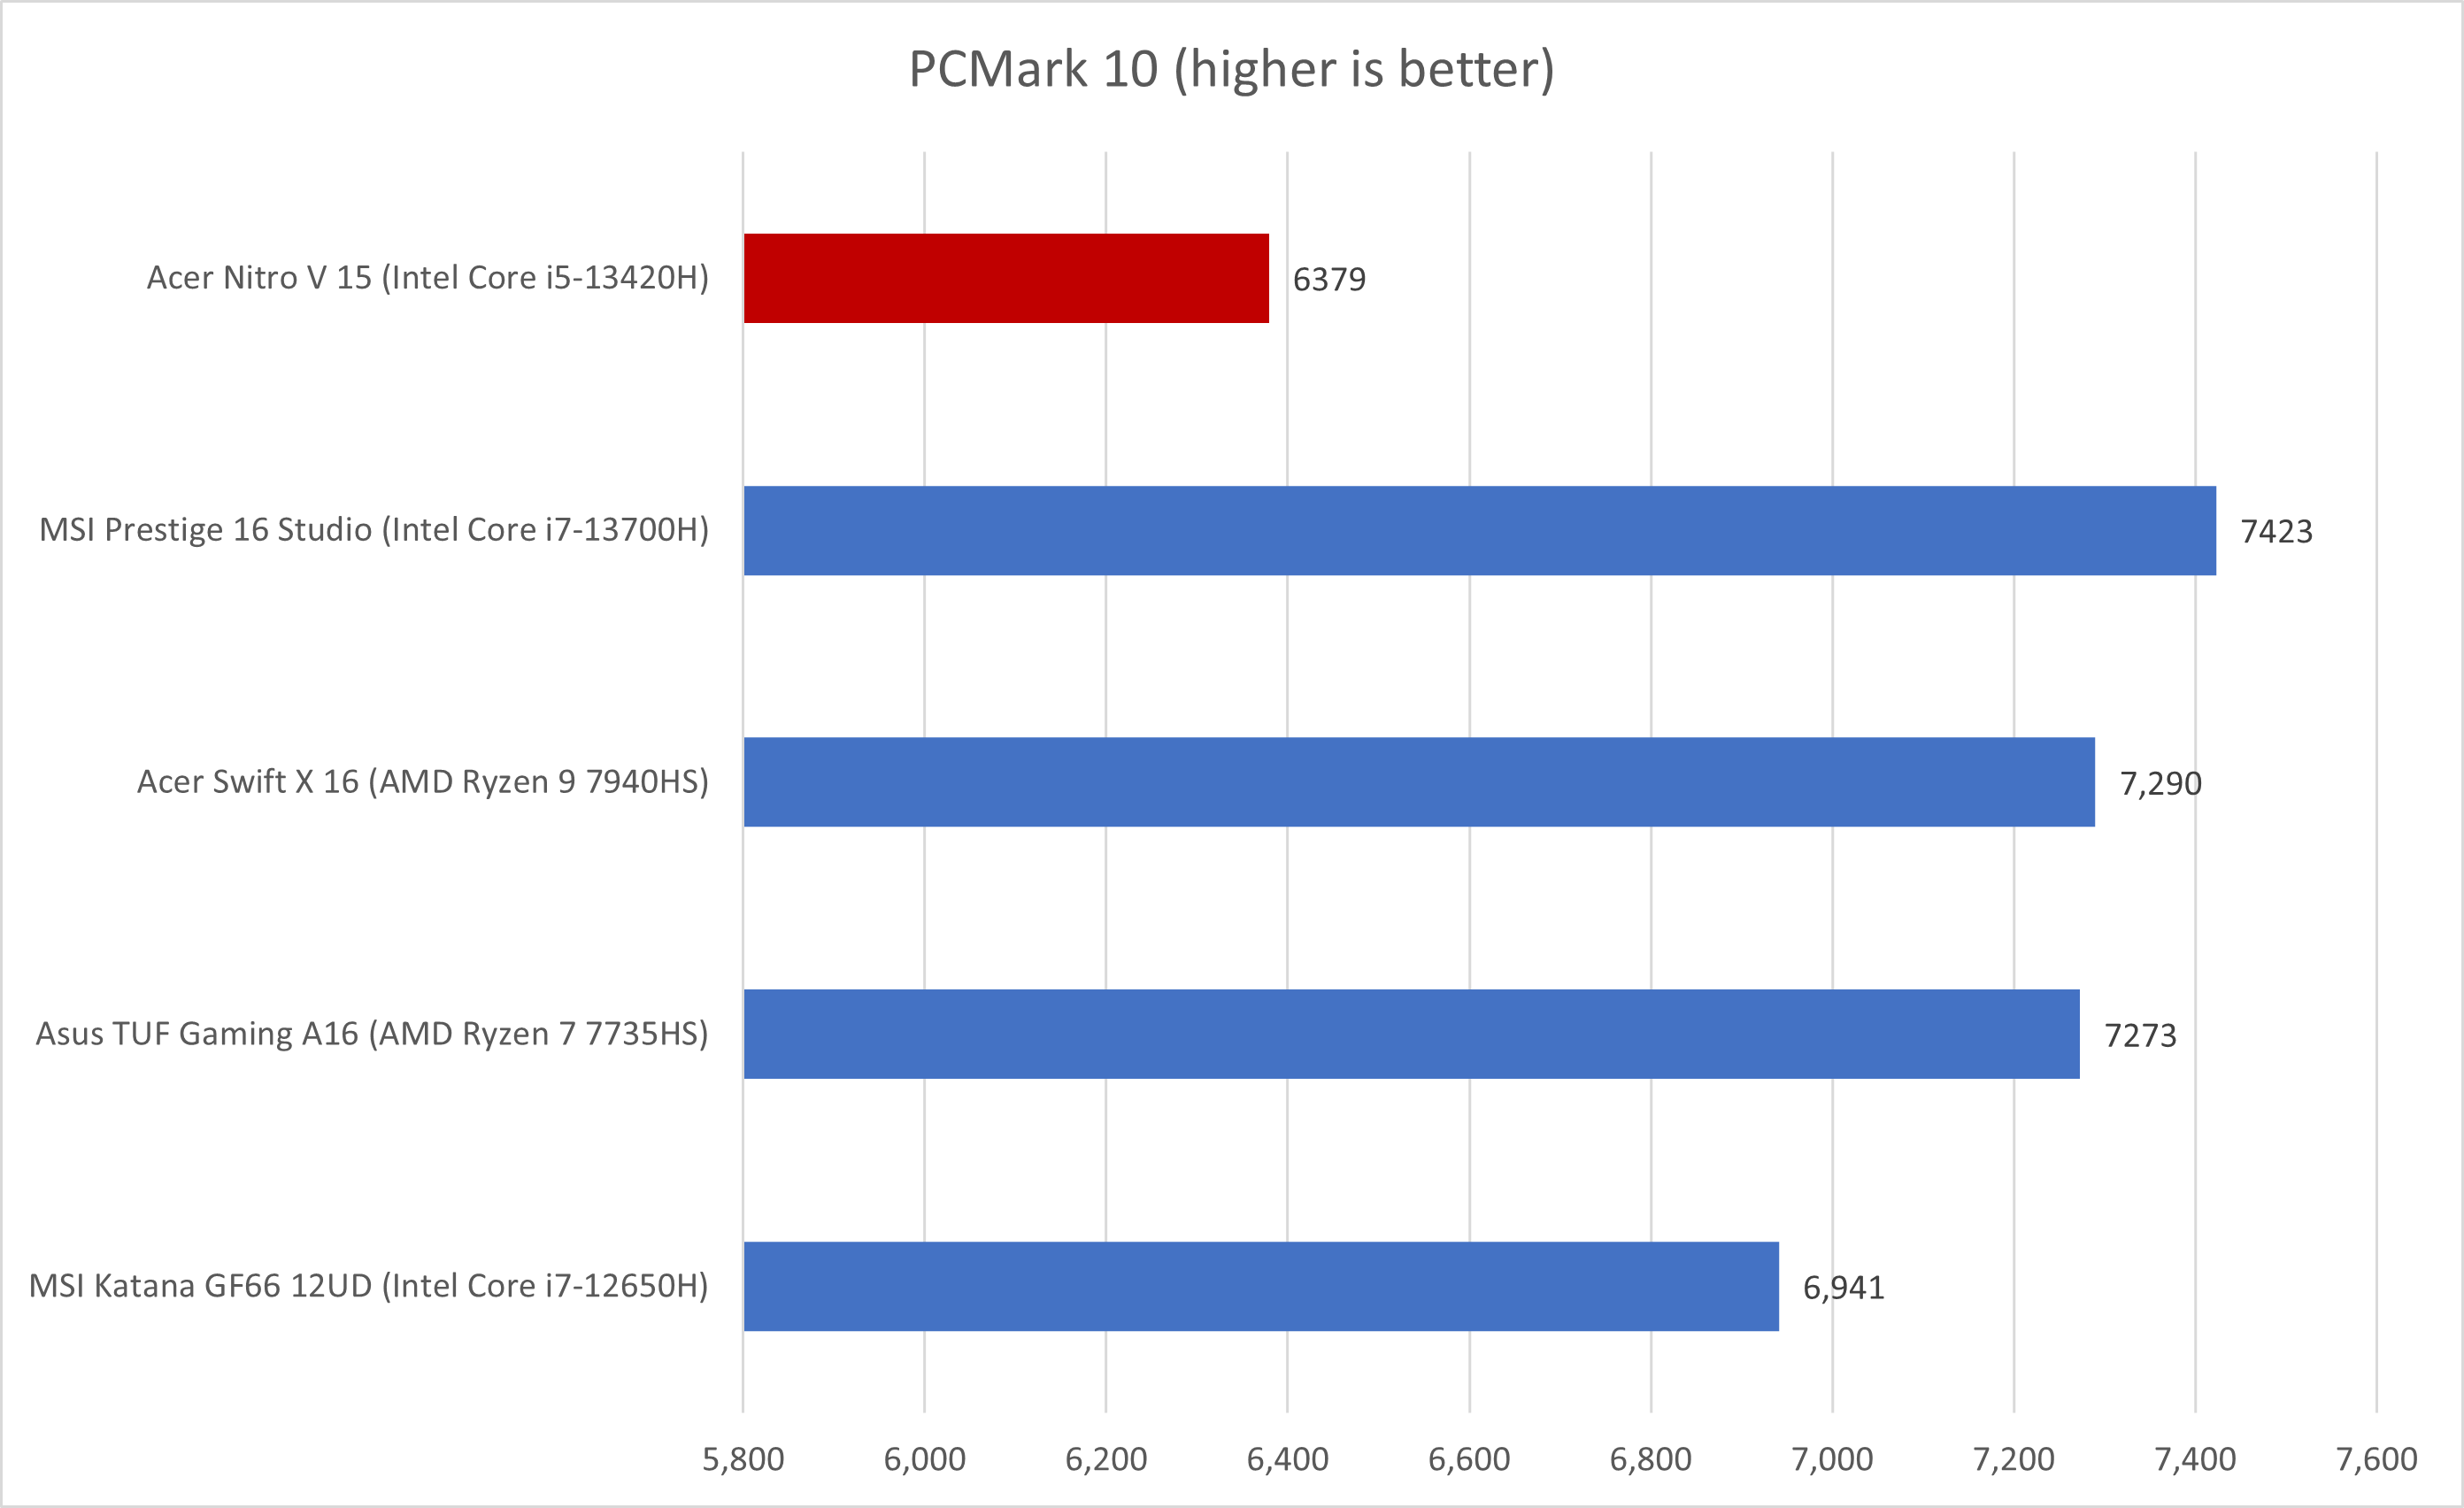 Acer Nitro V PCMark results